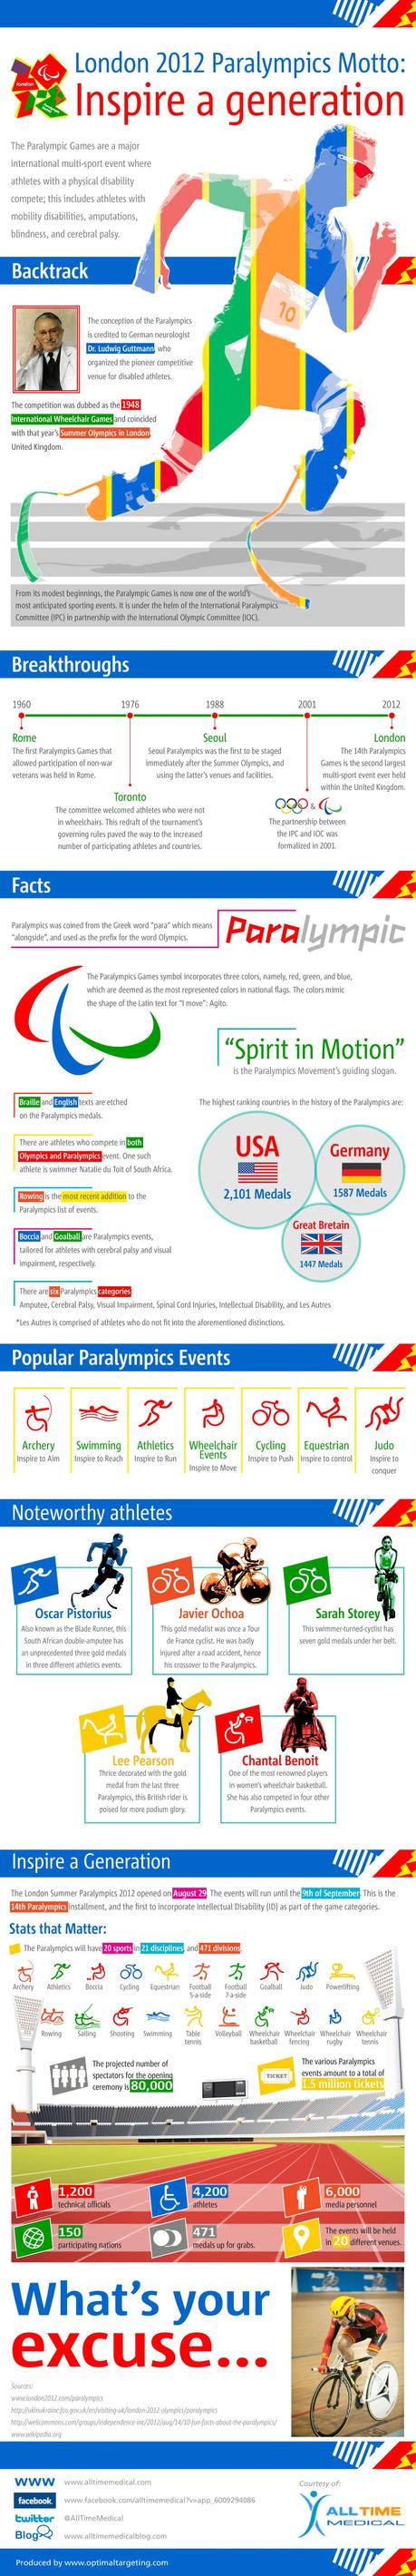 London 2012 Paralympics Infographic